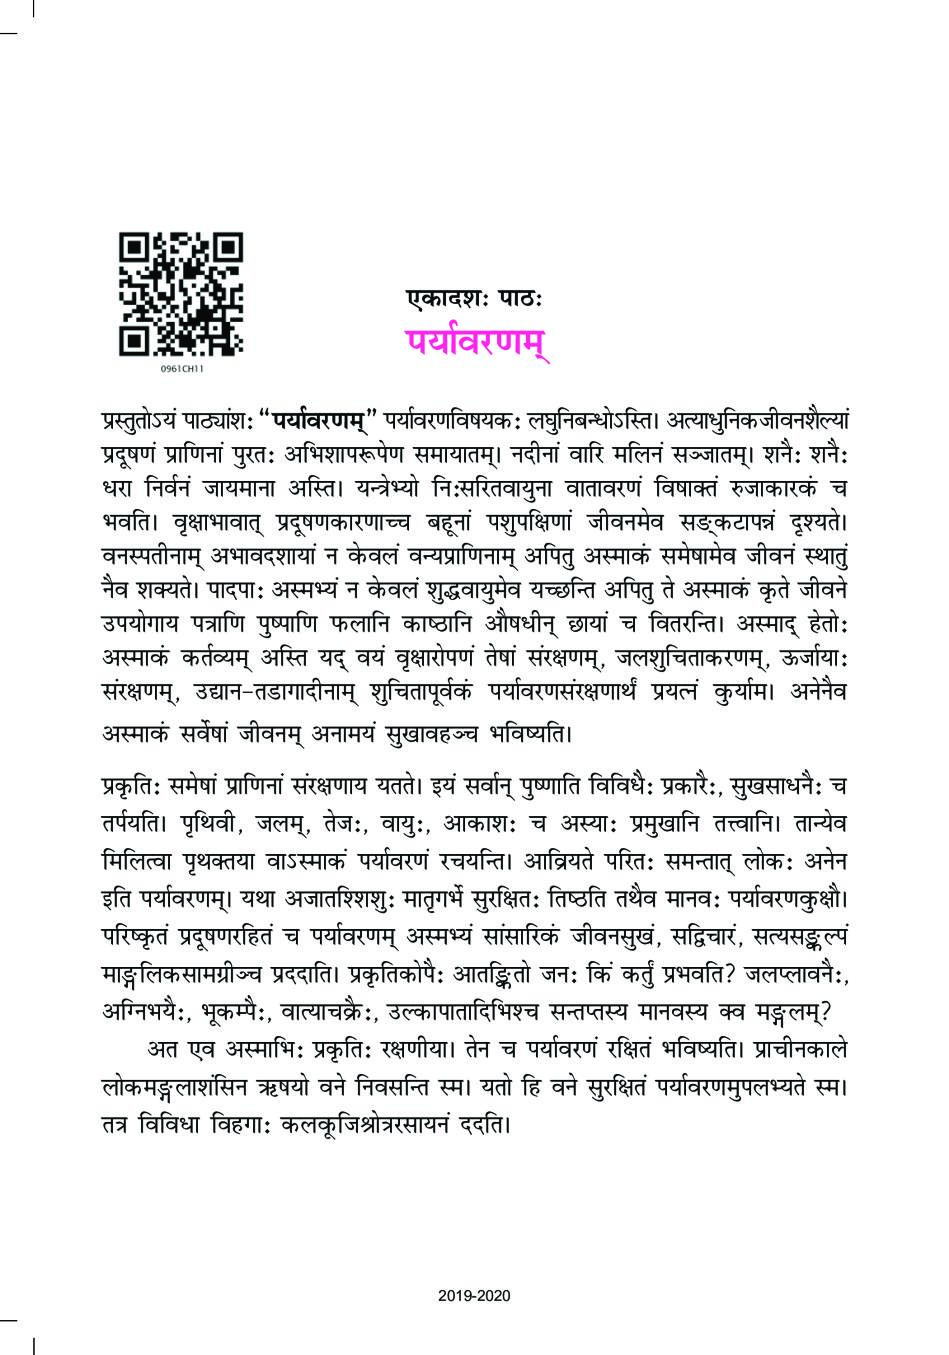 NCERT Book Class 9 Sanskrit (शेमुशी प्रथमो) Chapter 11 पर्यावरणम - Page 1